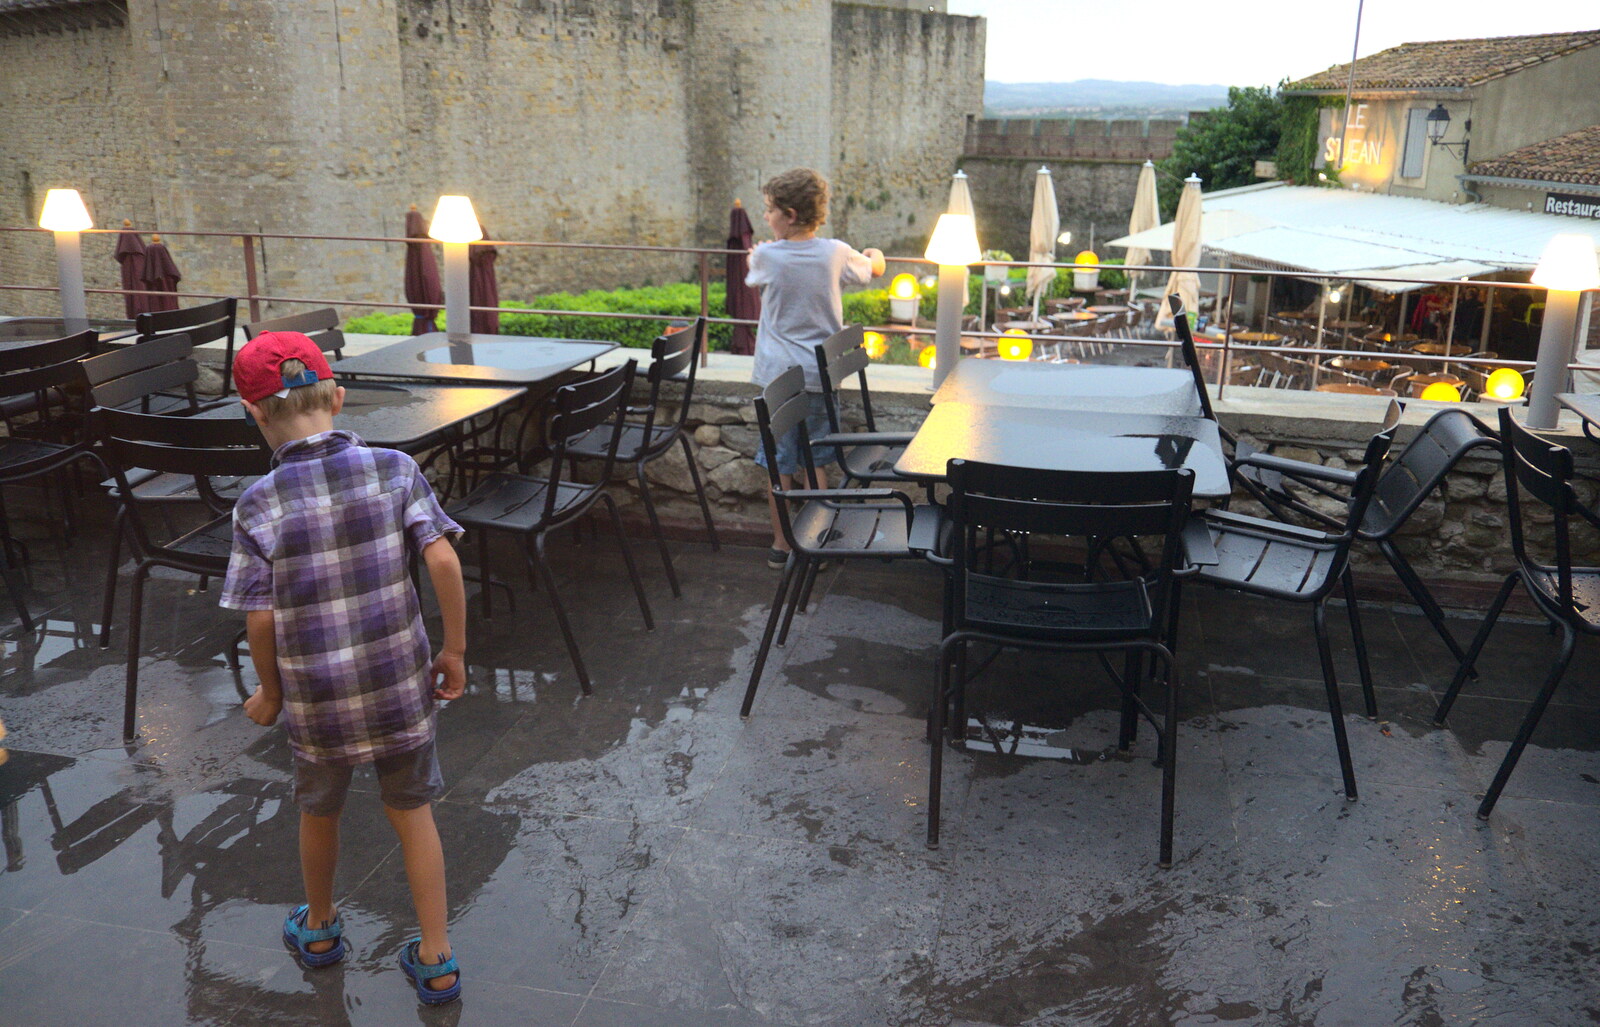 The boys on the terrace at Le Créneau restaurant from A Trip to Carcassonne, Aude, France - 8th August 2018